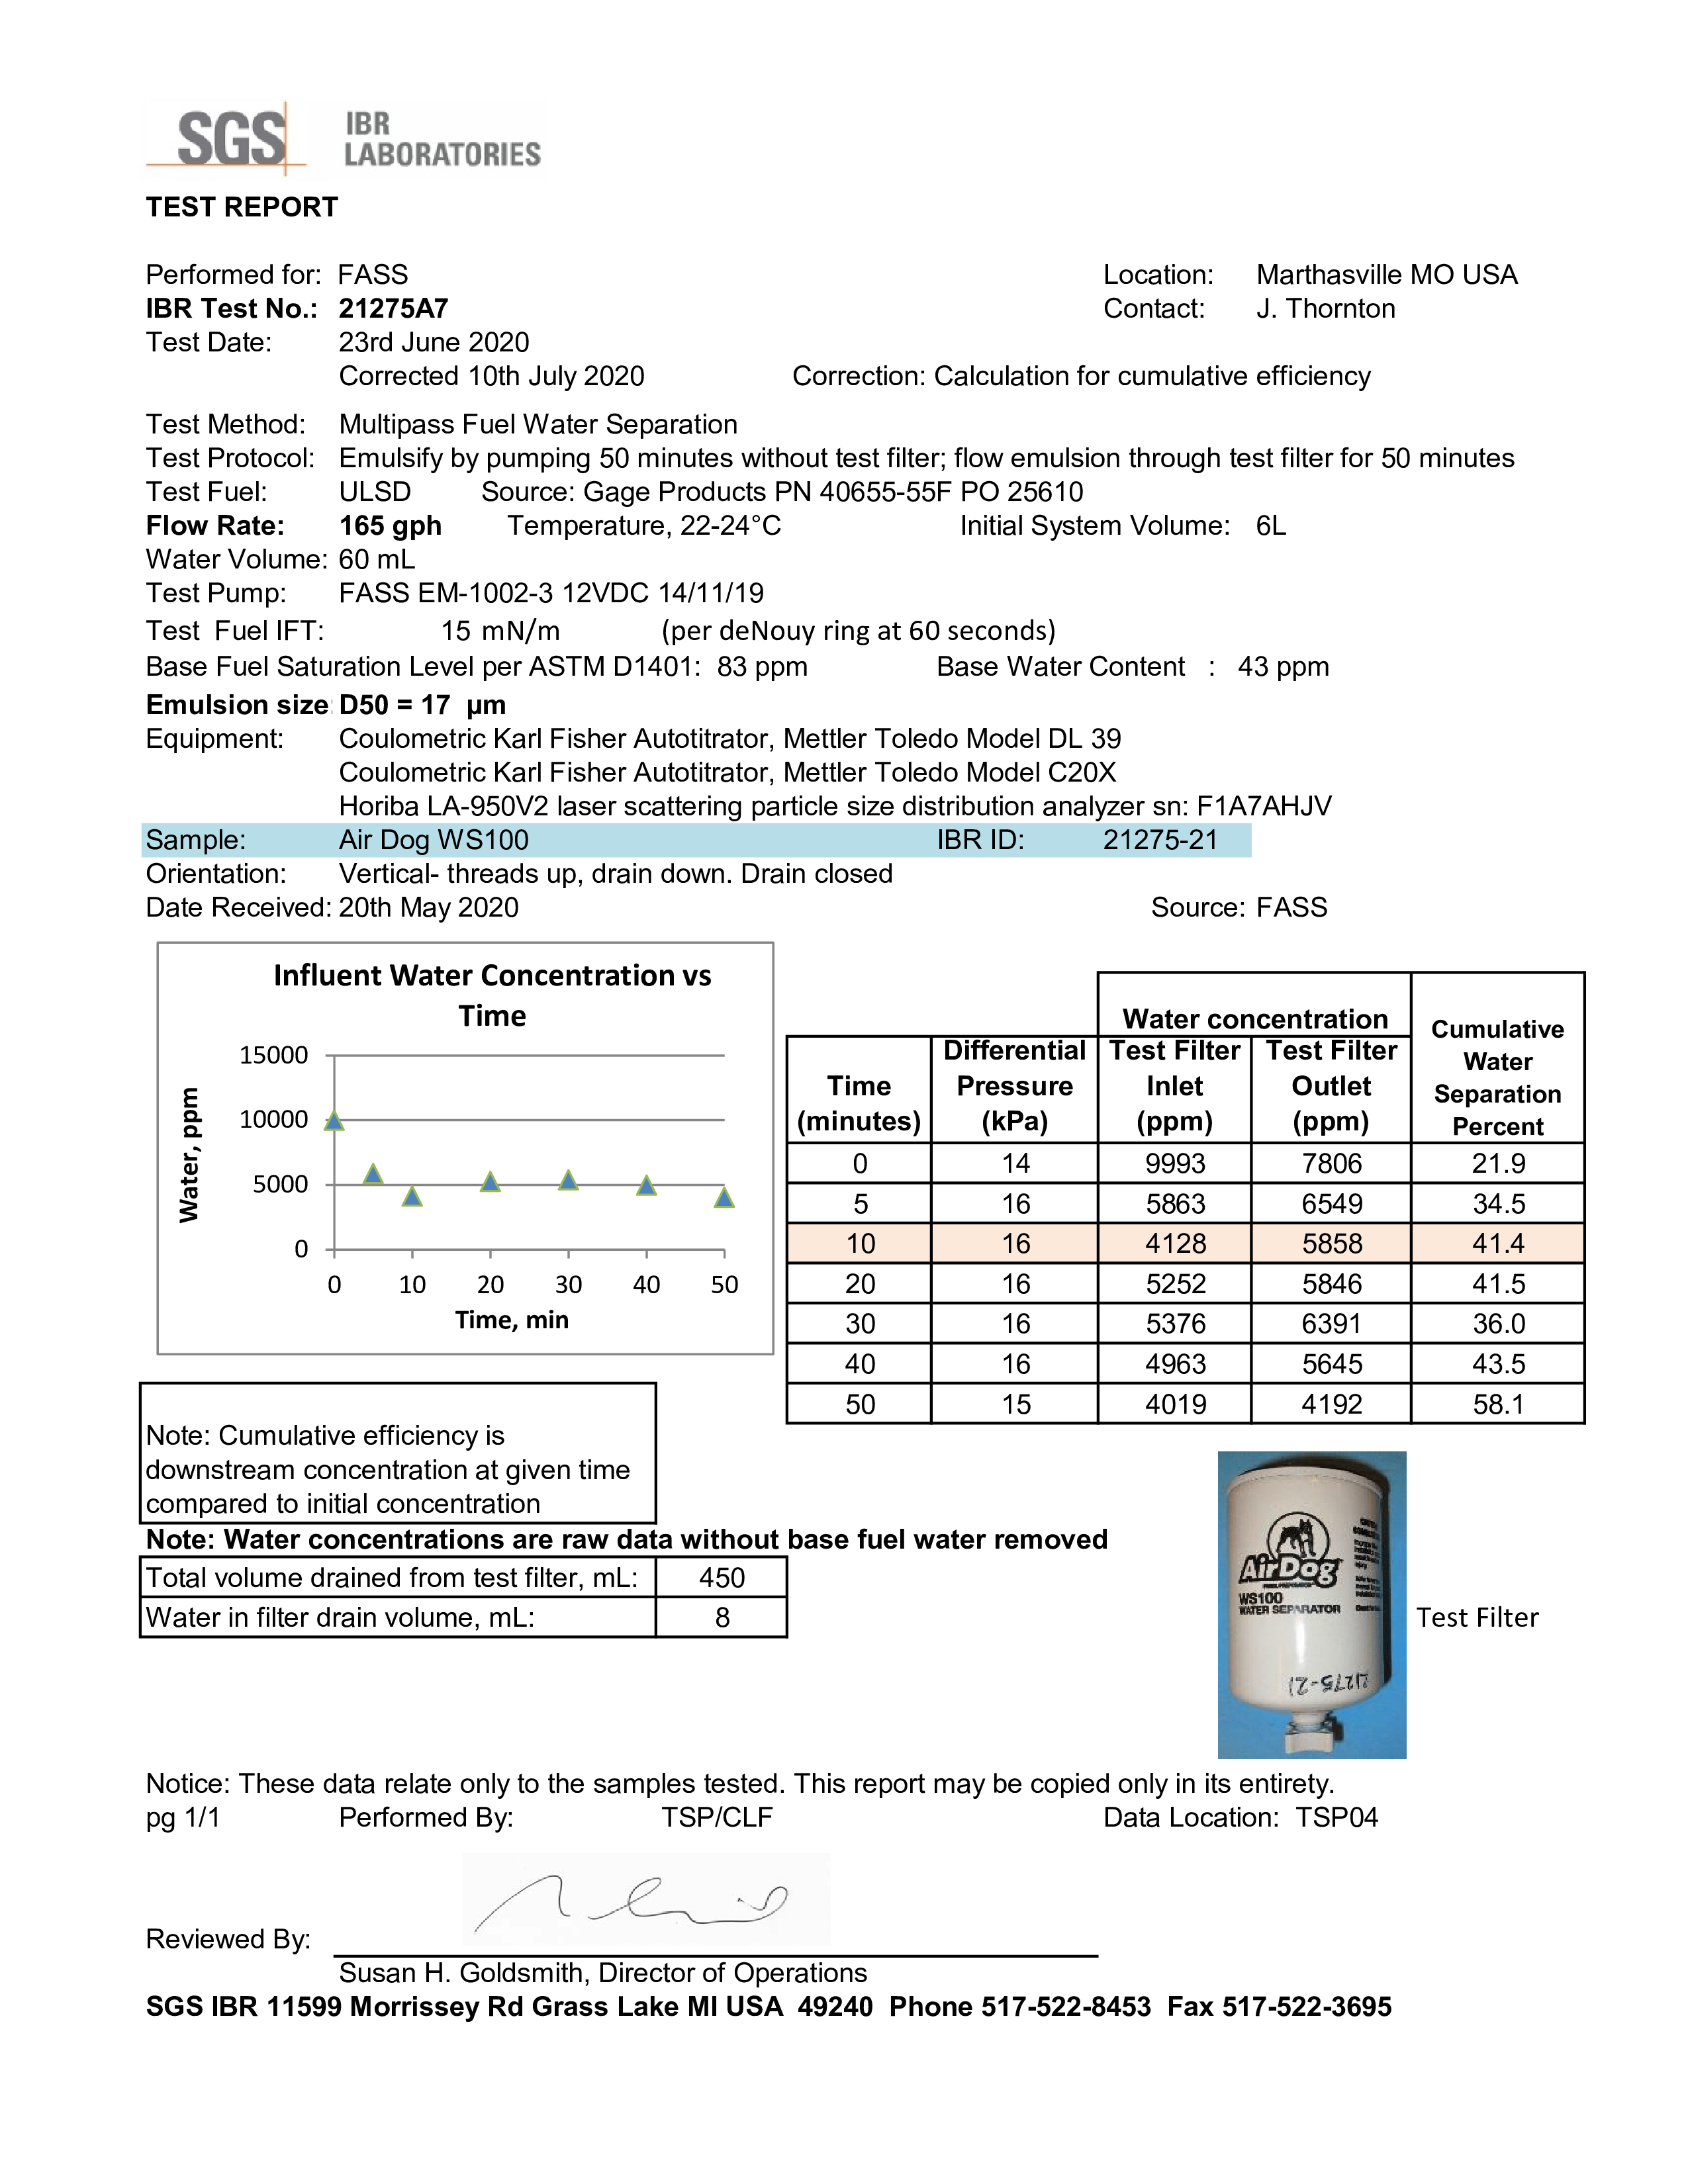 airdog_fuel filter test results